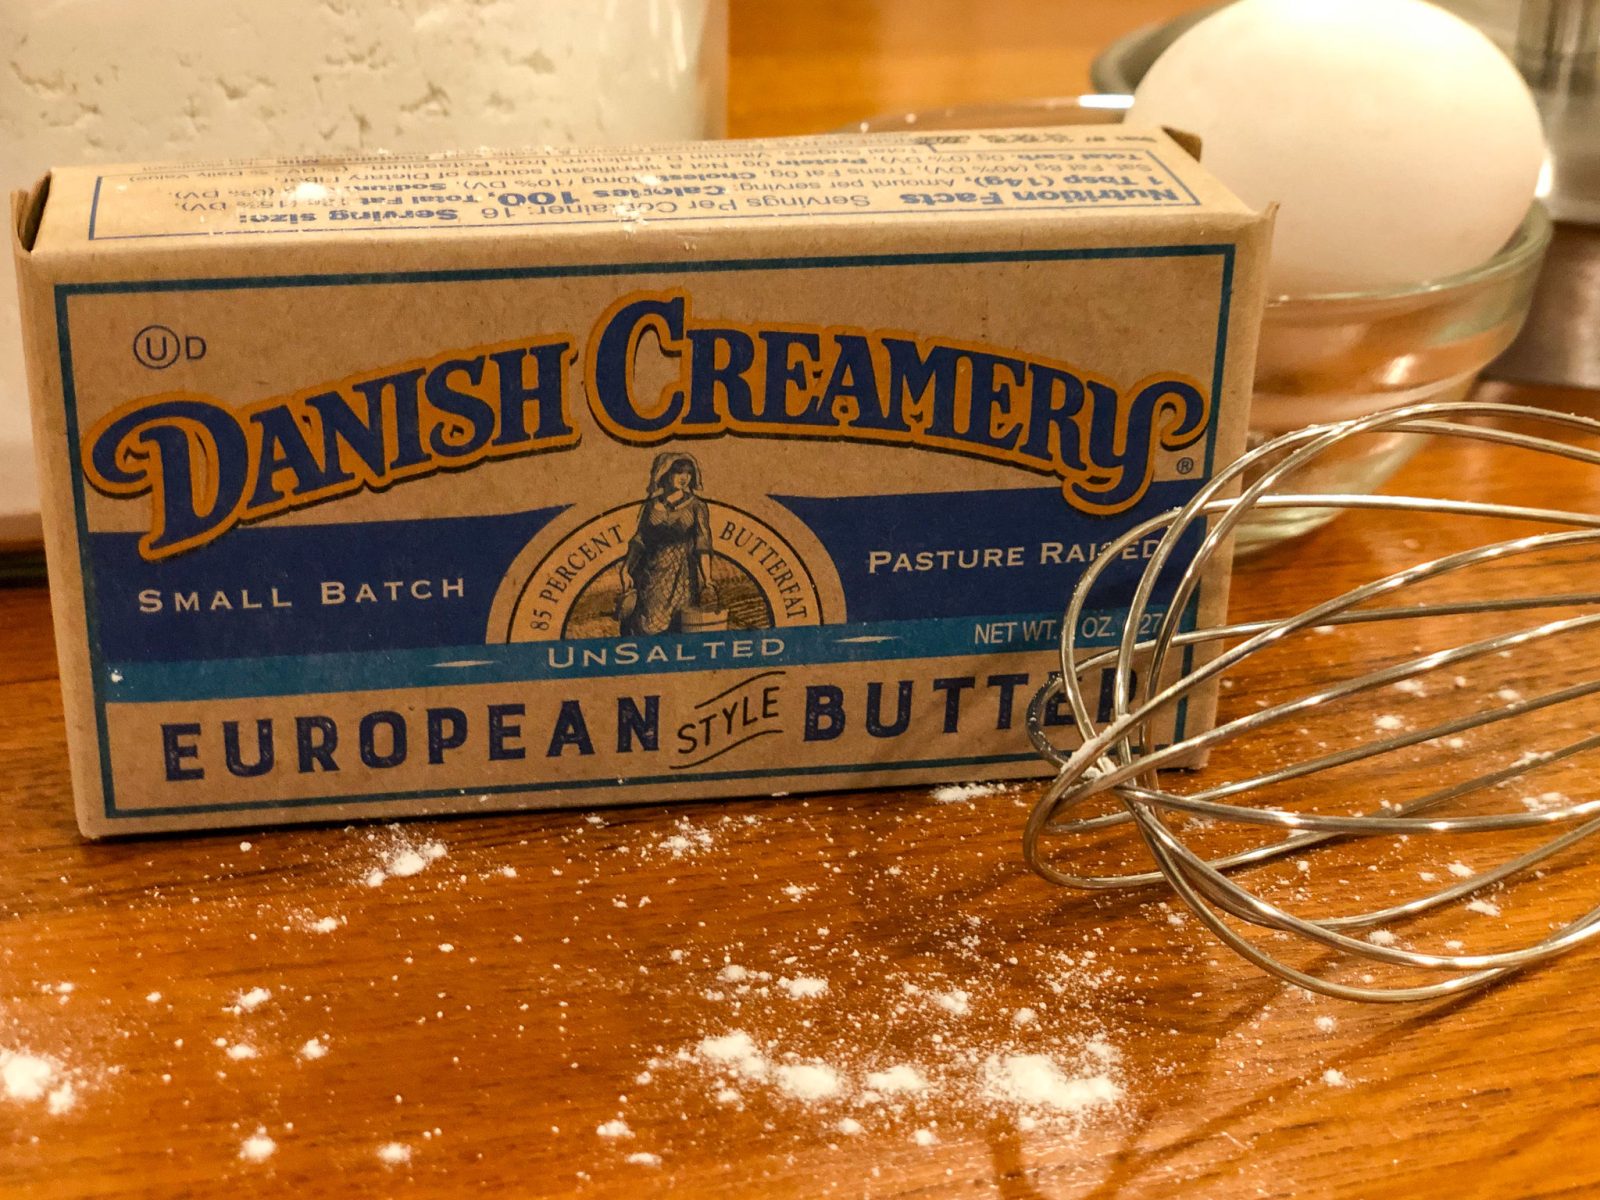 Danish Creamery European Style Butter Just $1.99 (Regular Price $3.49)